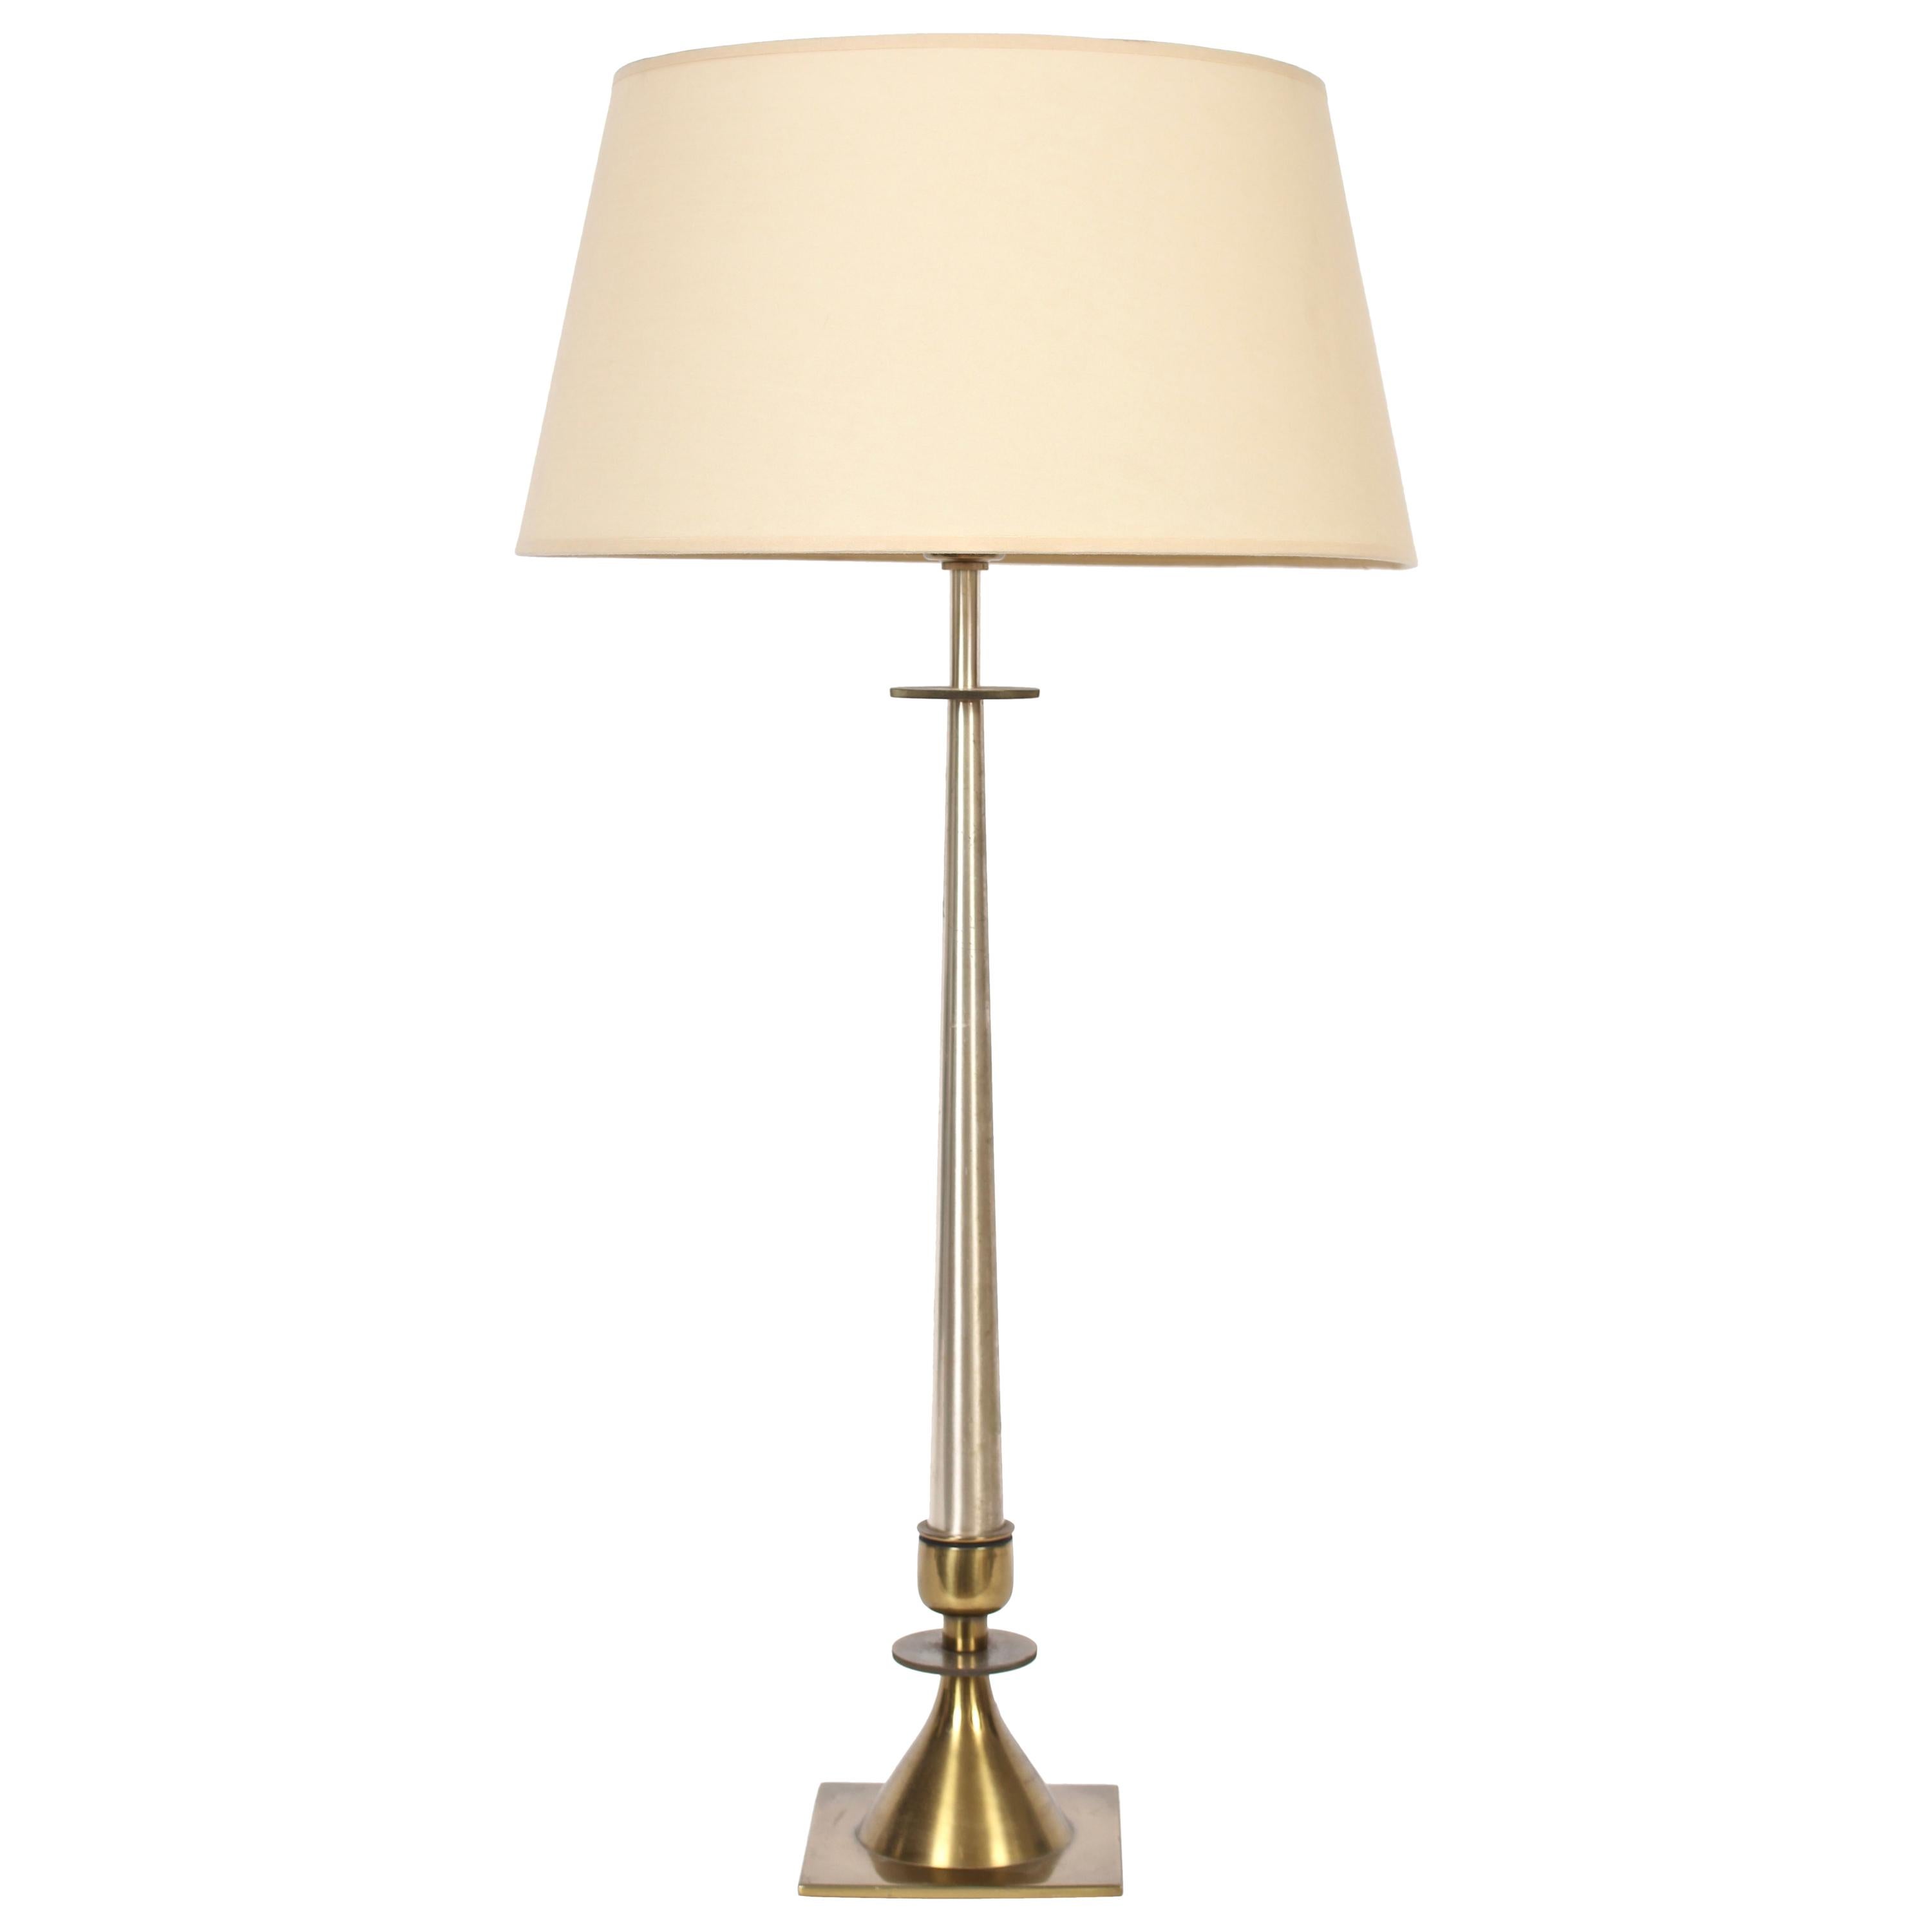 Tall Tommi Parzinger Style Nickel & Brass Stiffel Lamp with Milk Glass Shade